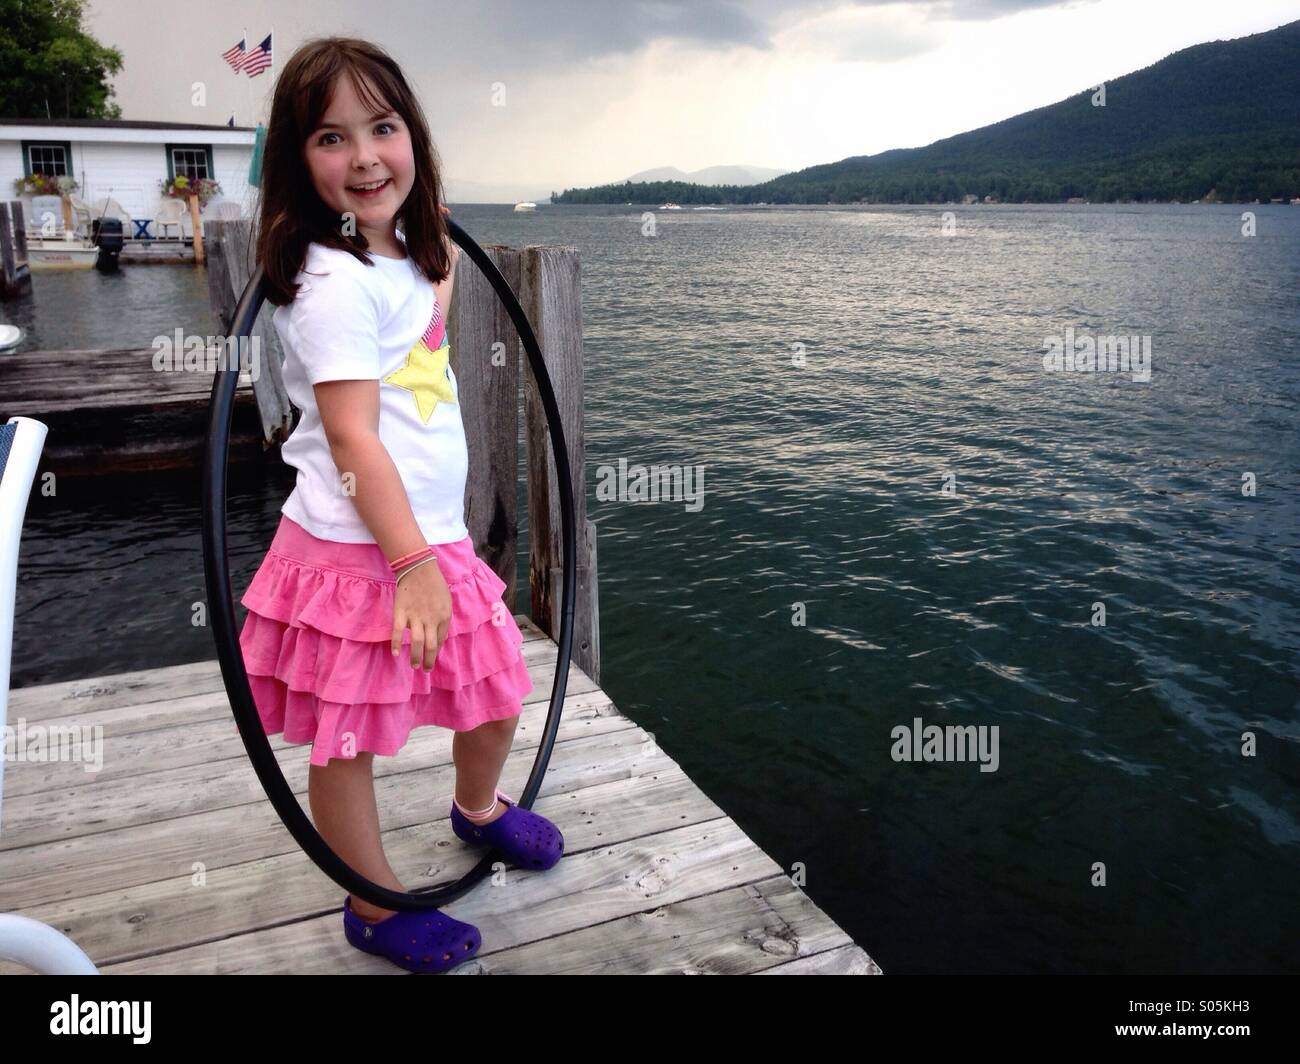 Young girl on dock with hula hoop Stock Photo